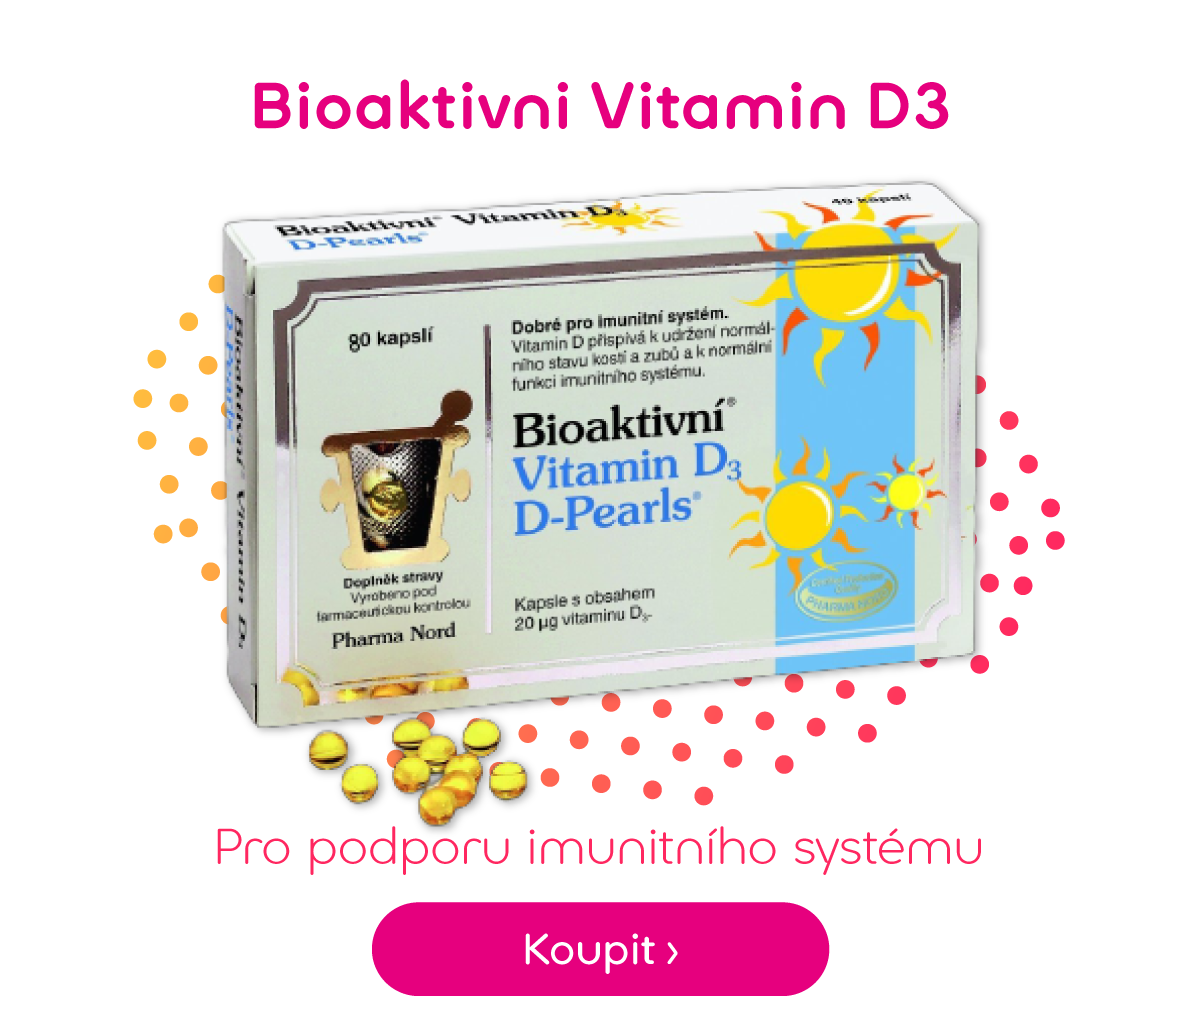 Bioaktivni Vitamin D3